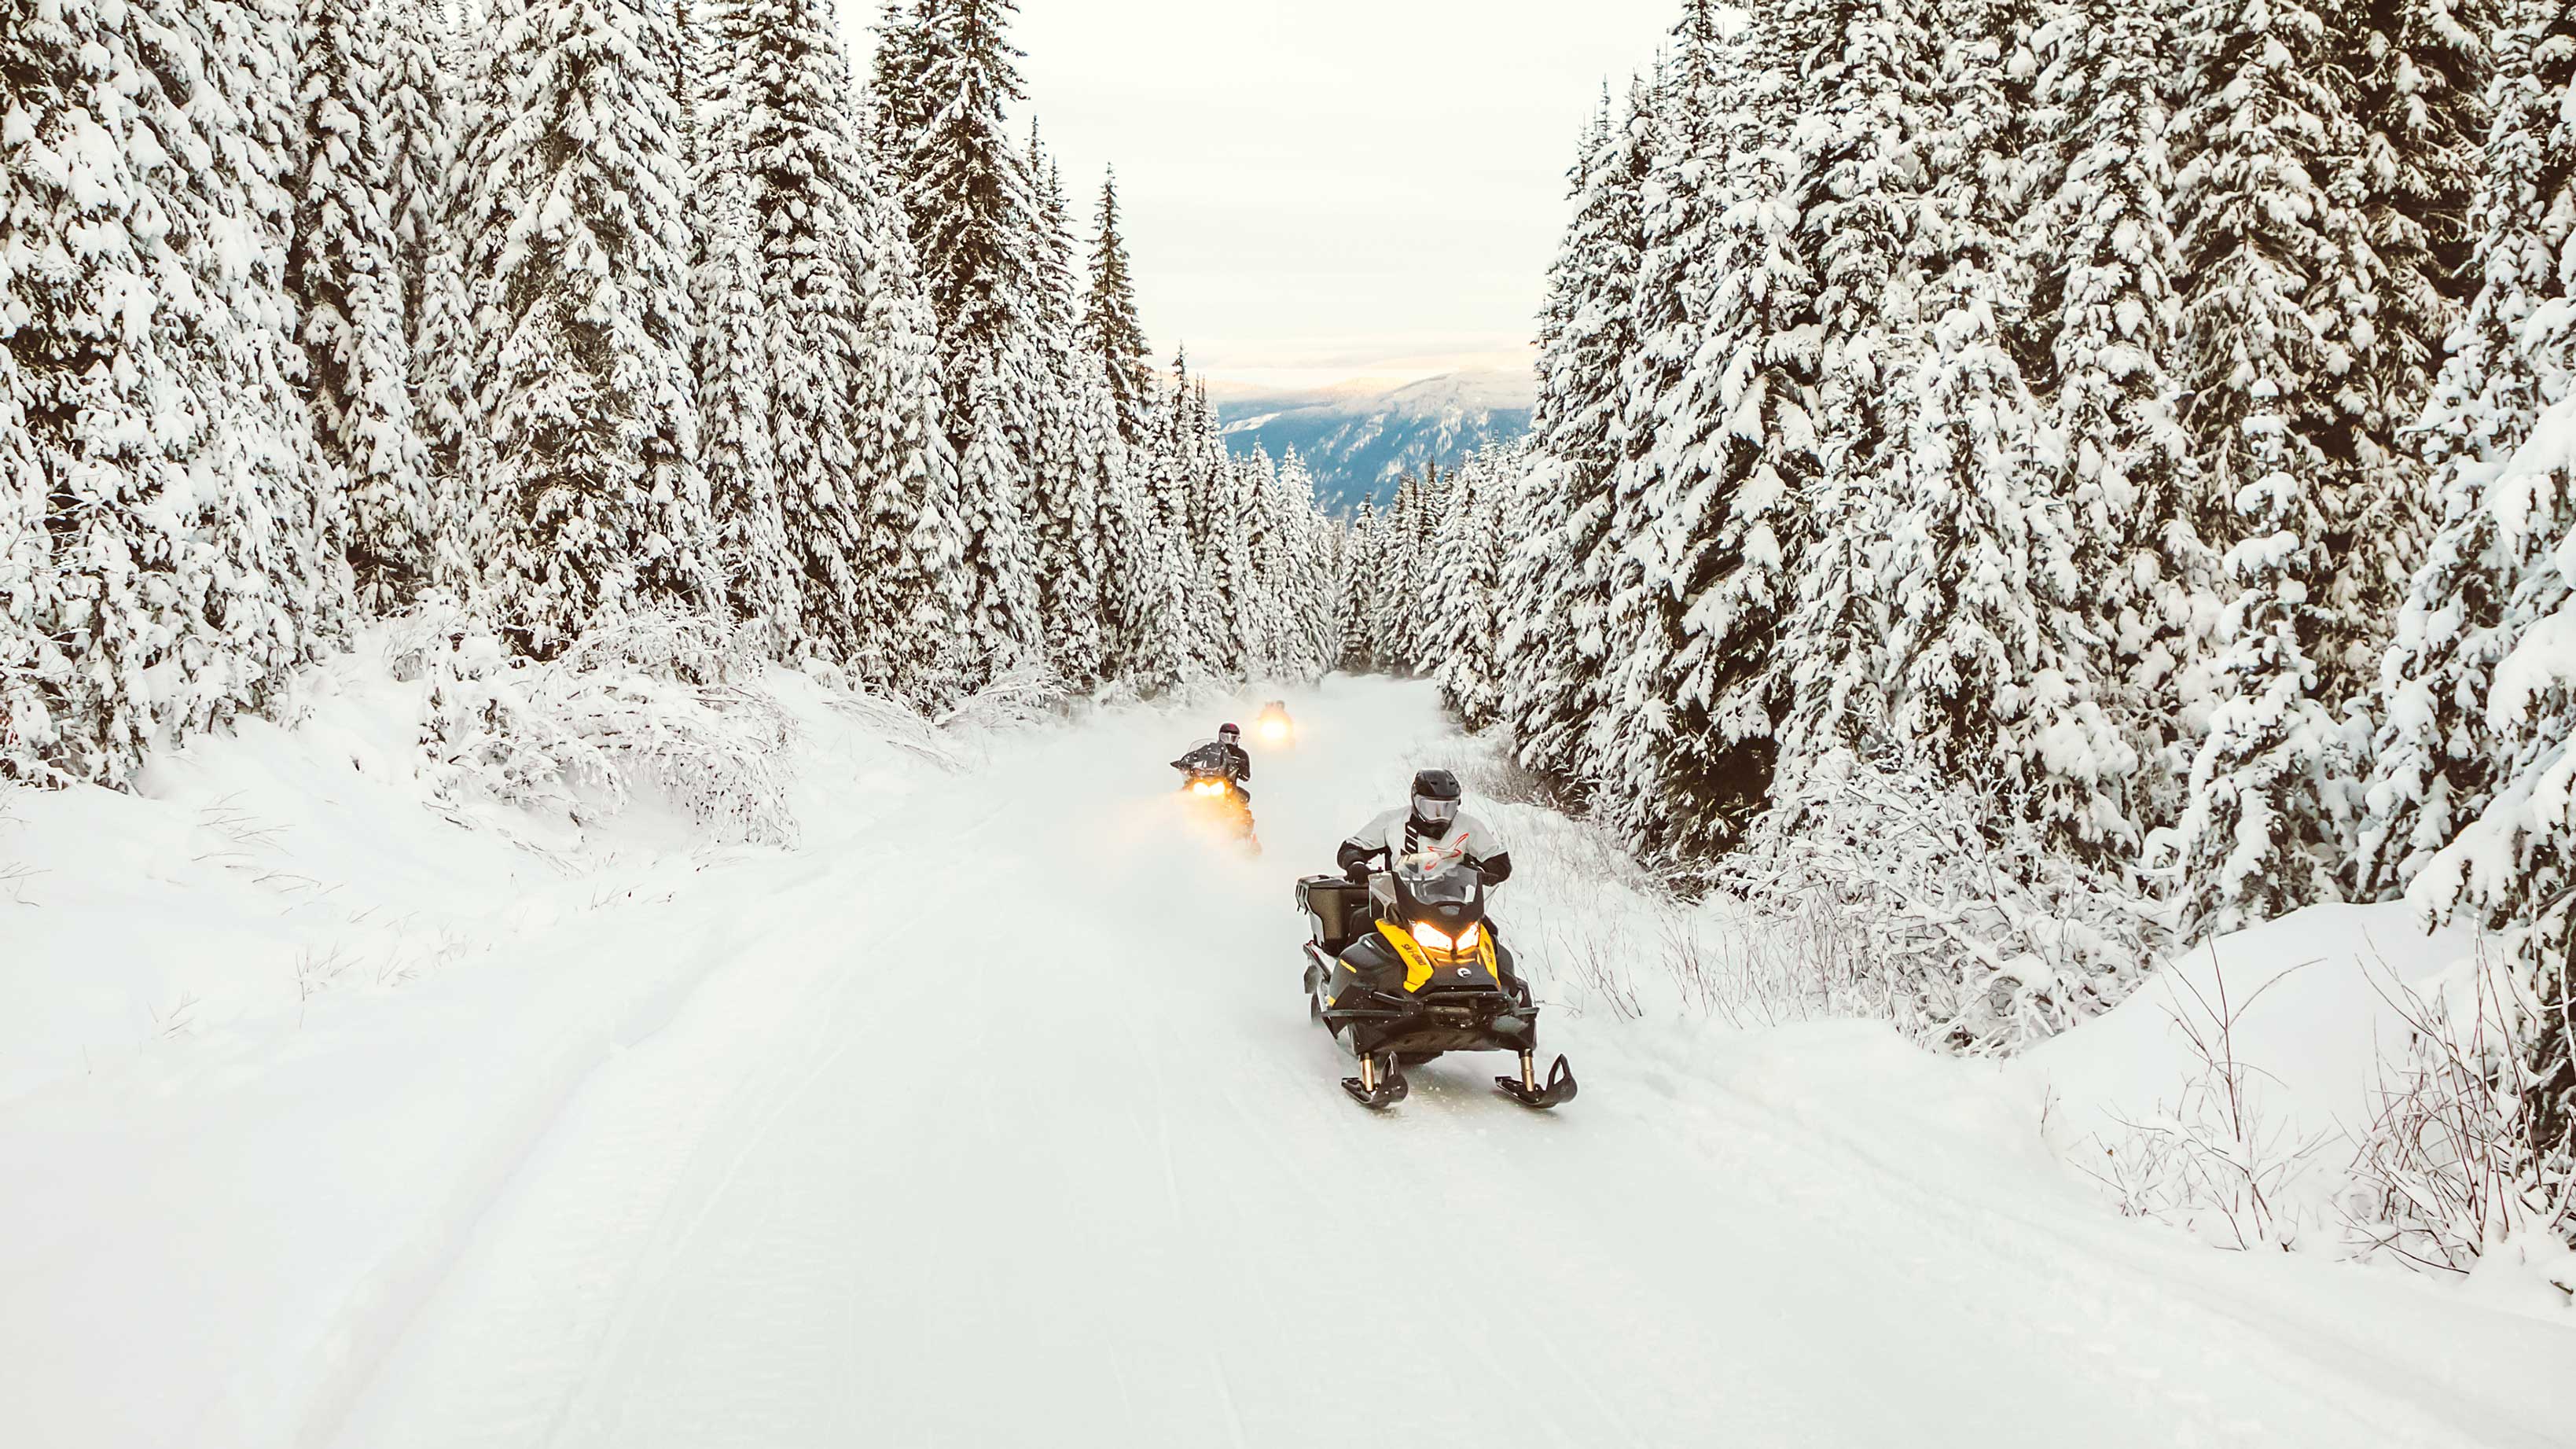 Two Ski-Doo Tundra riding fast on a snow trail